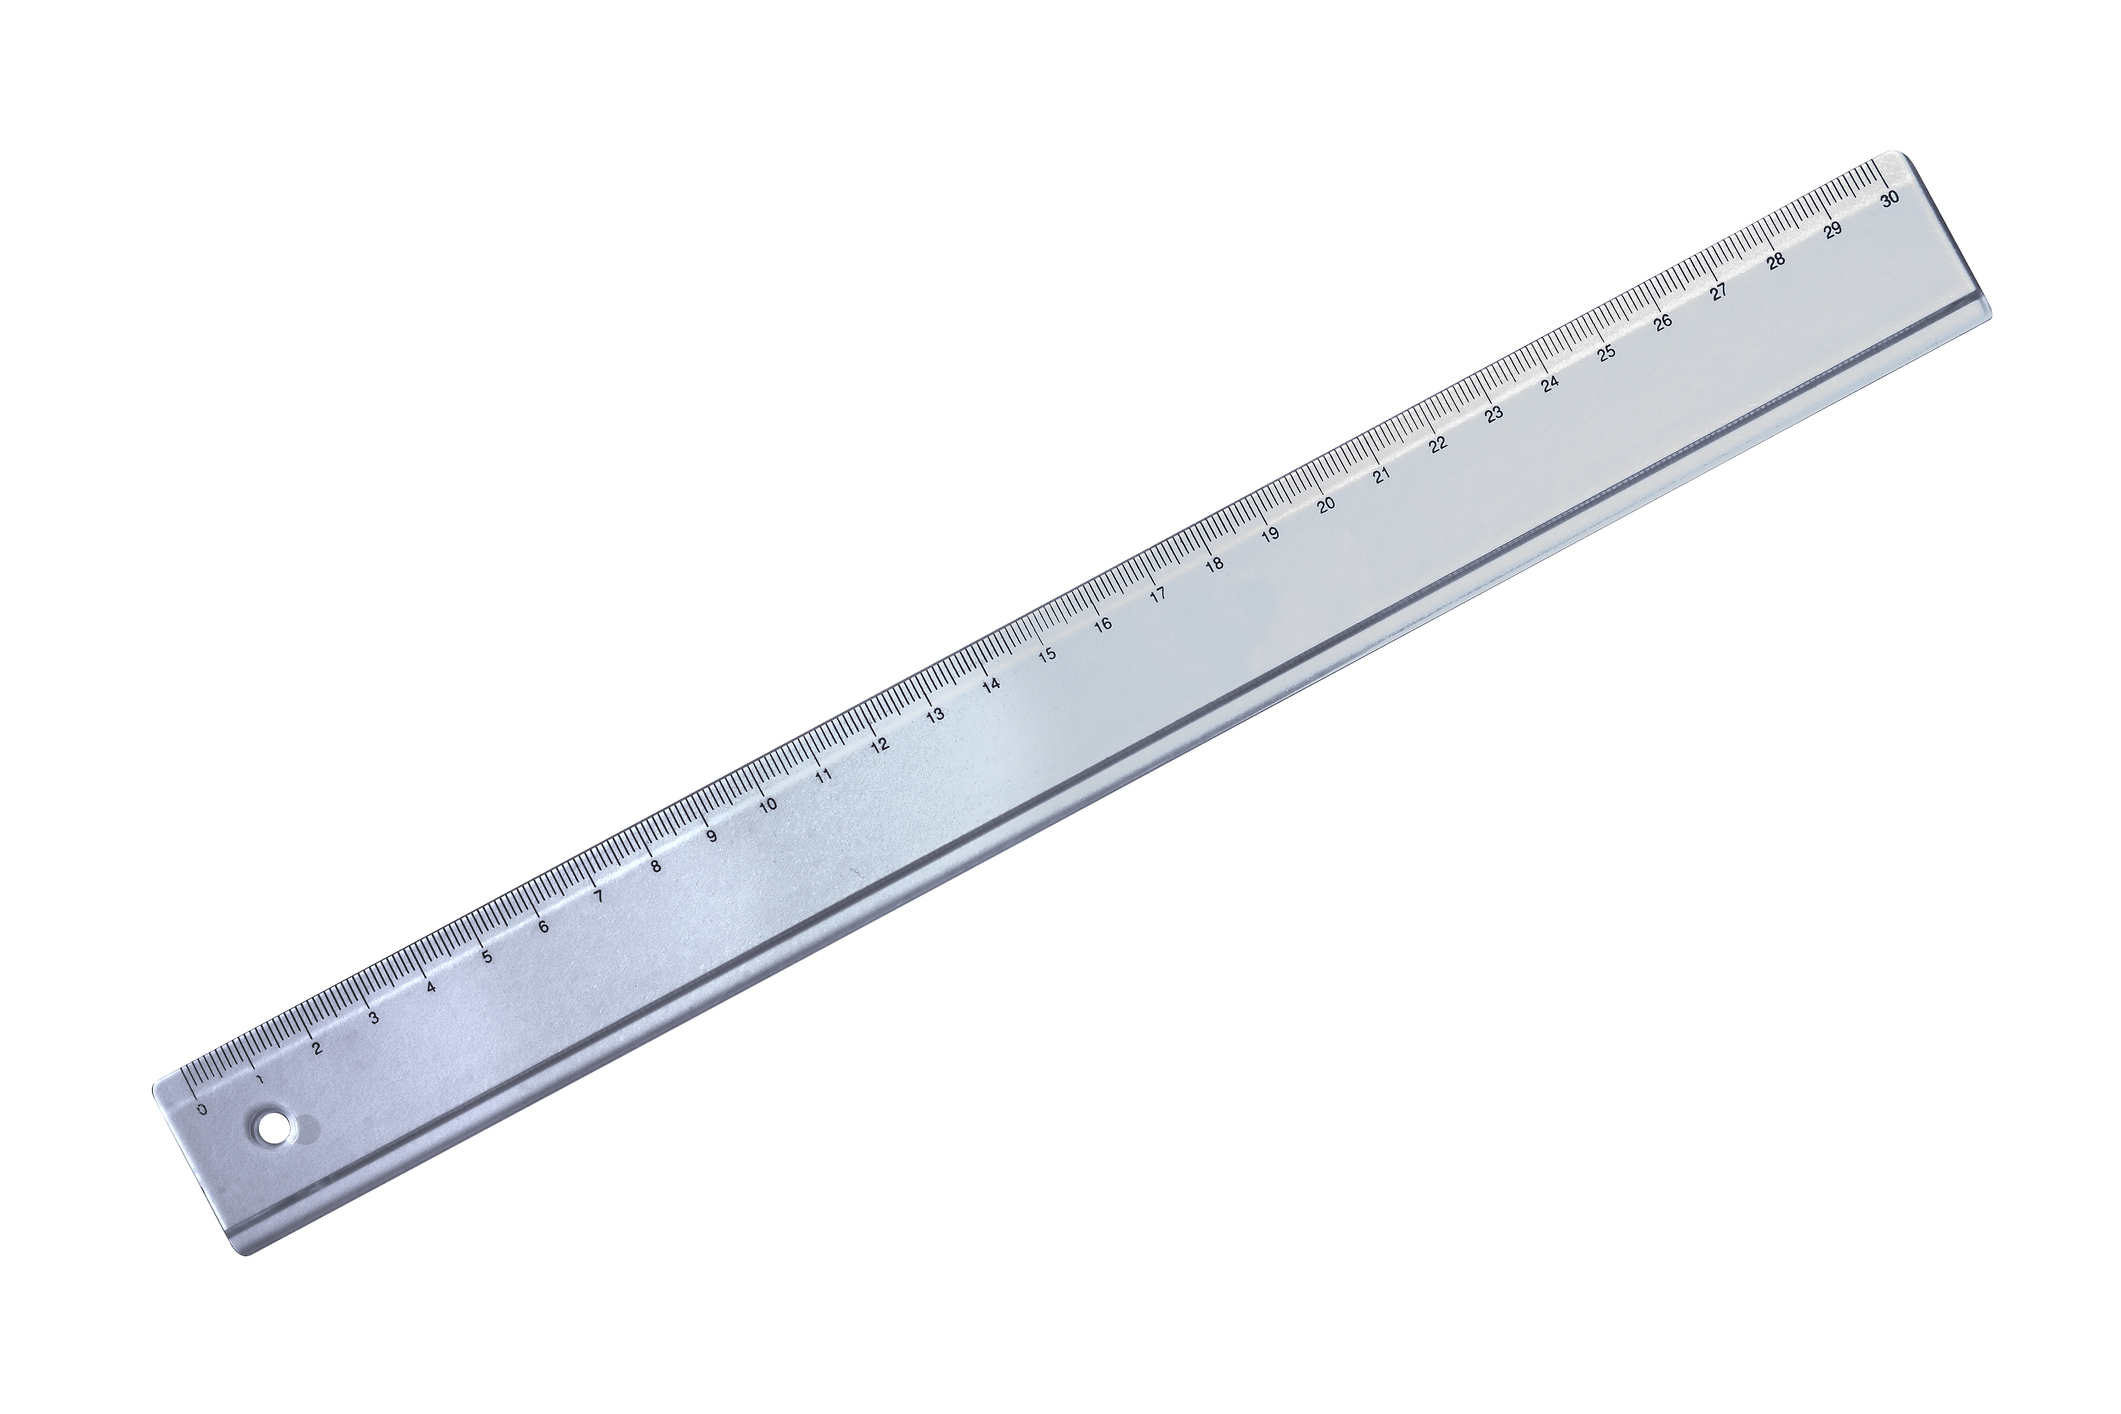 A 30cm ruler